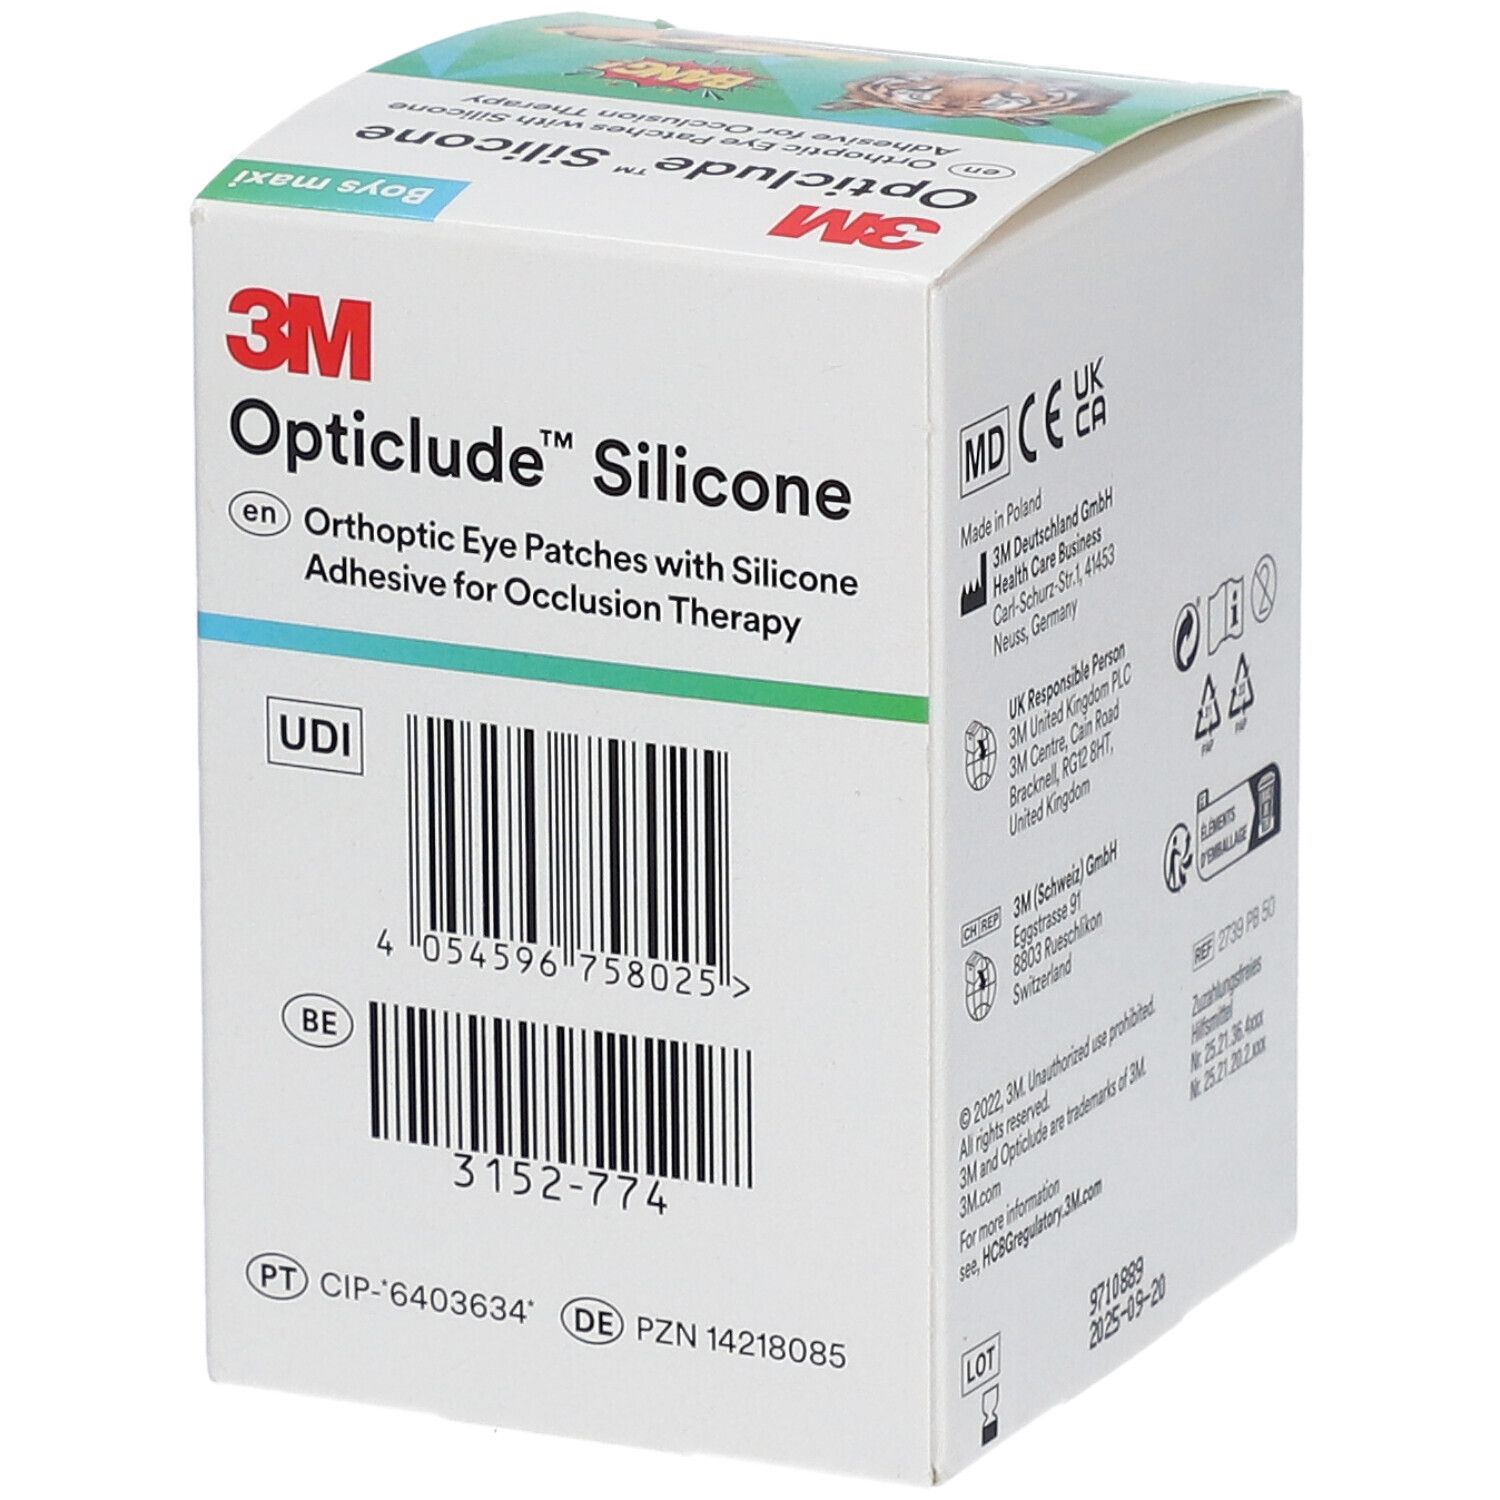 Opticlude 3M Silicone Boys maxi 5,7 x 8 cm